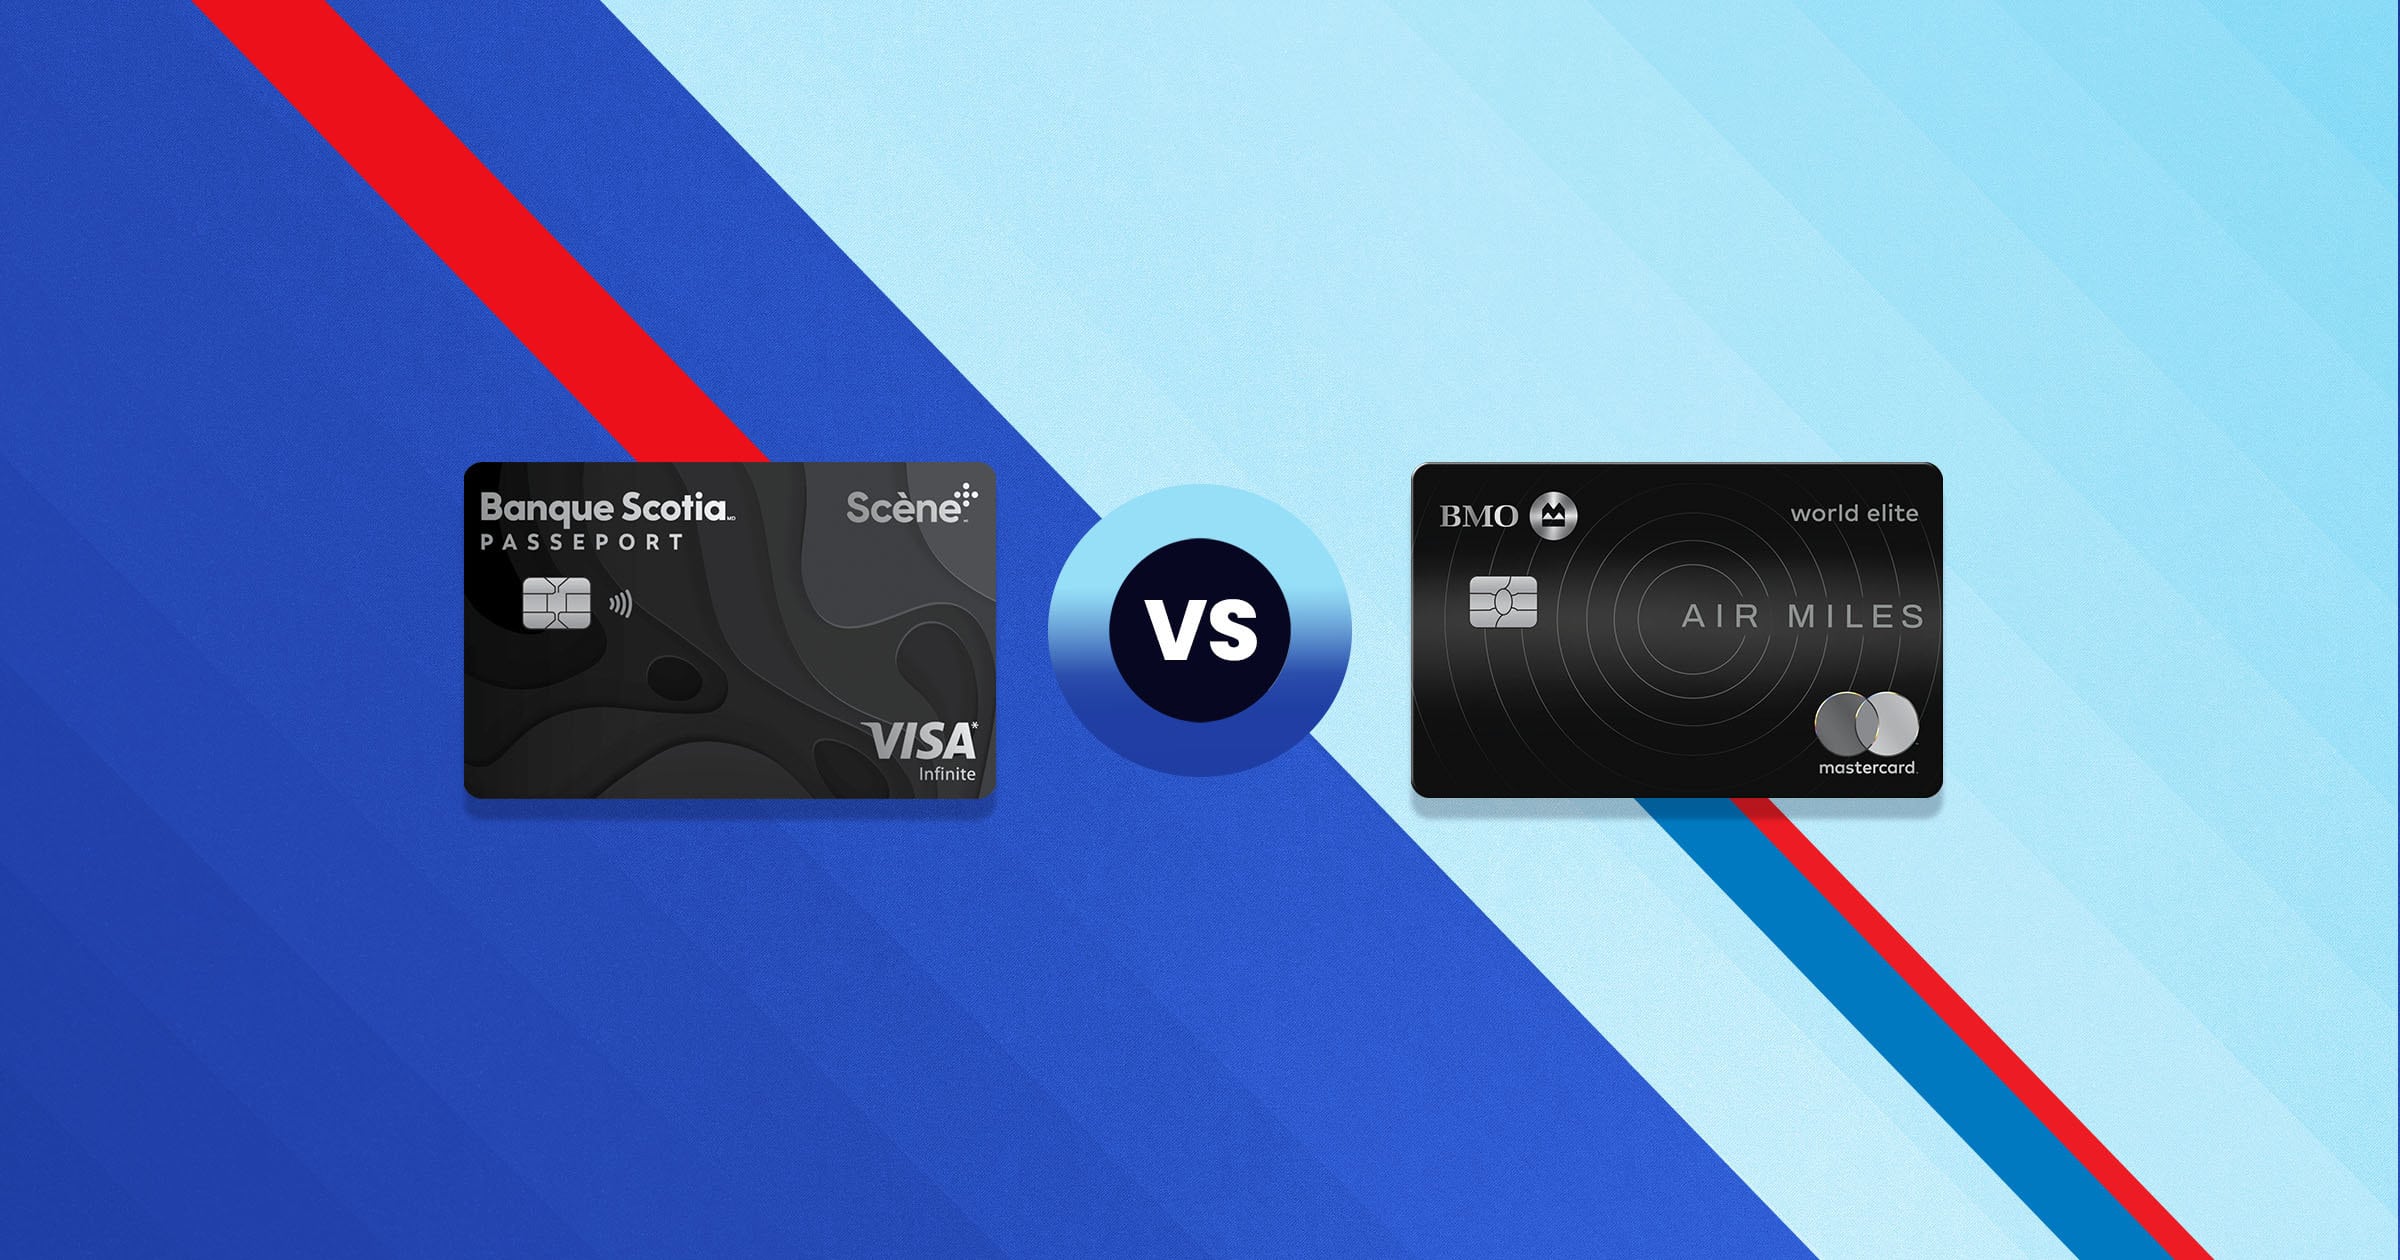 Visa Infinite Passeport Banque Scotia vs Carte Mastercard BMO AIR MILES World Elite